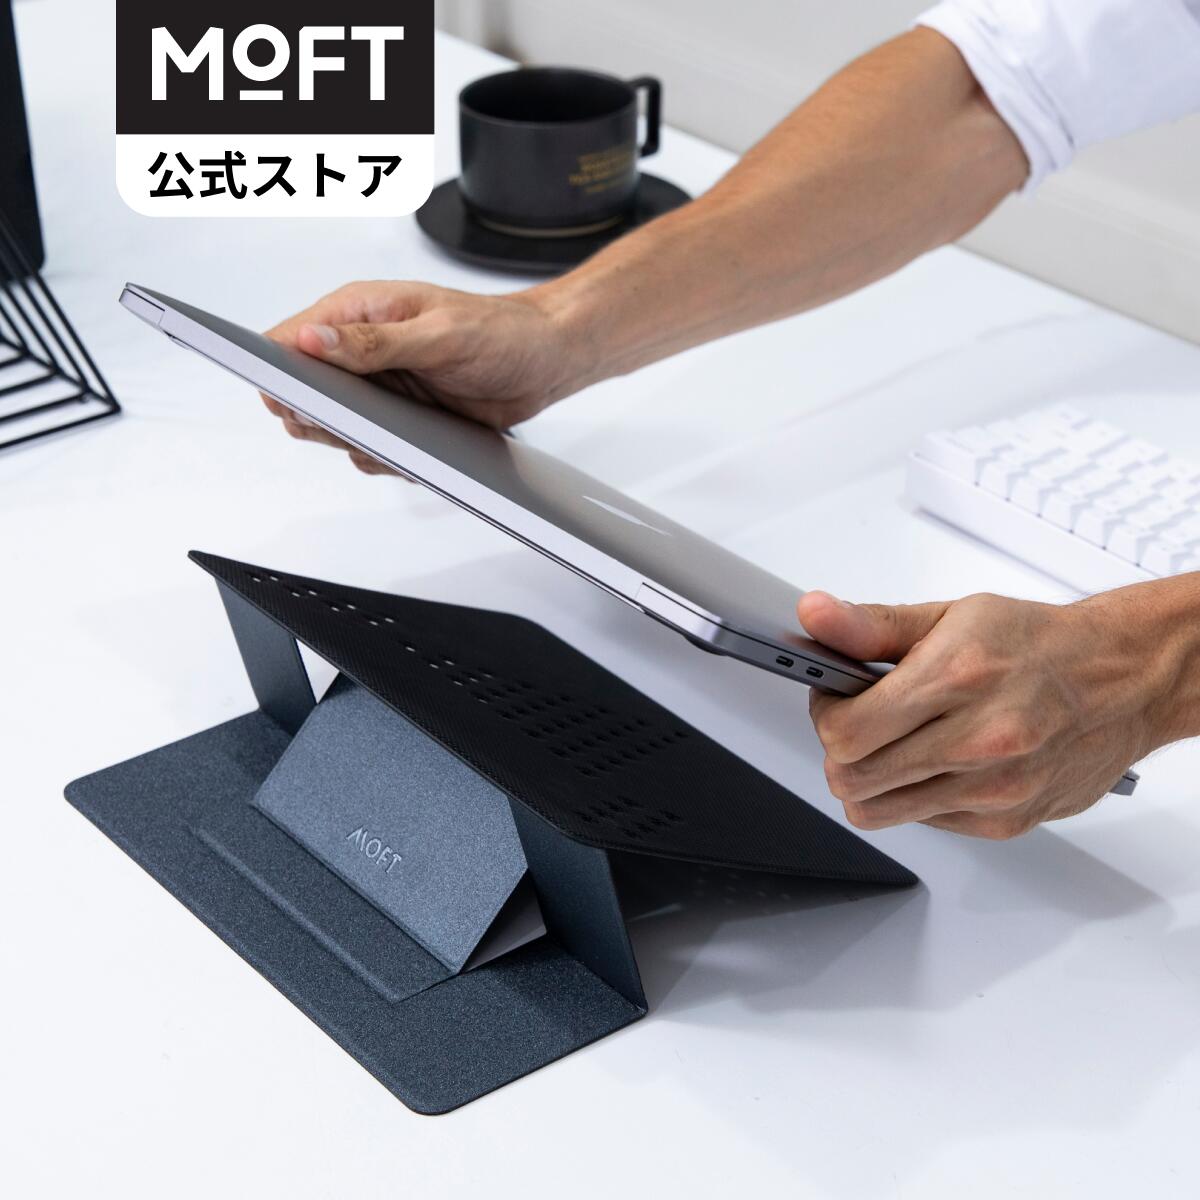 【MOFT公式〜多機種対応】MOFT公式 パソコン スタンド 非粘着タイプ 15° 25° PCスタンド タブレットスタンド 二段階調整可能 15.6インチまで対応 コンパクト 収納 放熱穴付き 折り畳式 腰痛防止 1